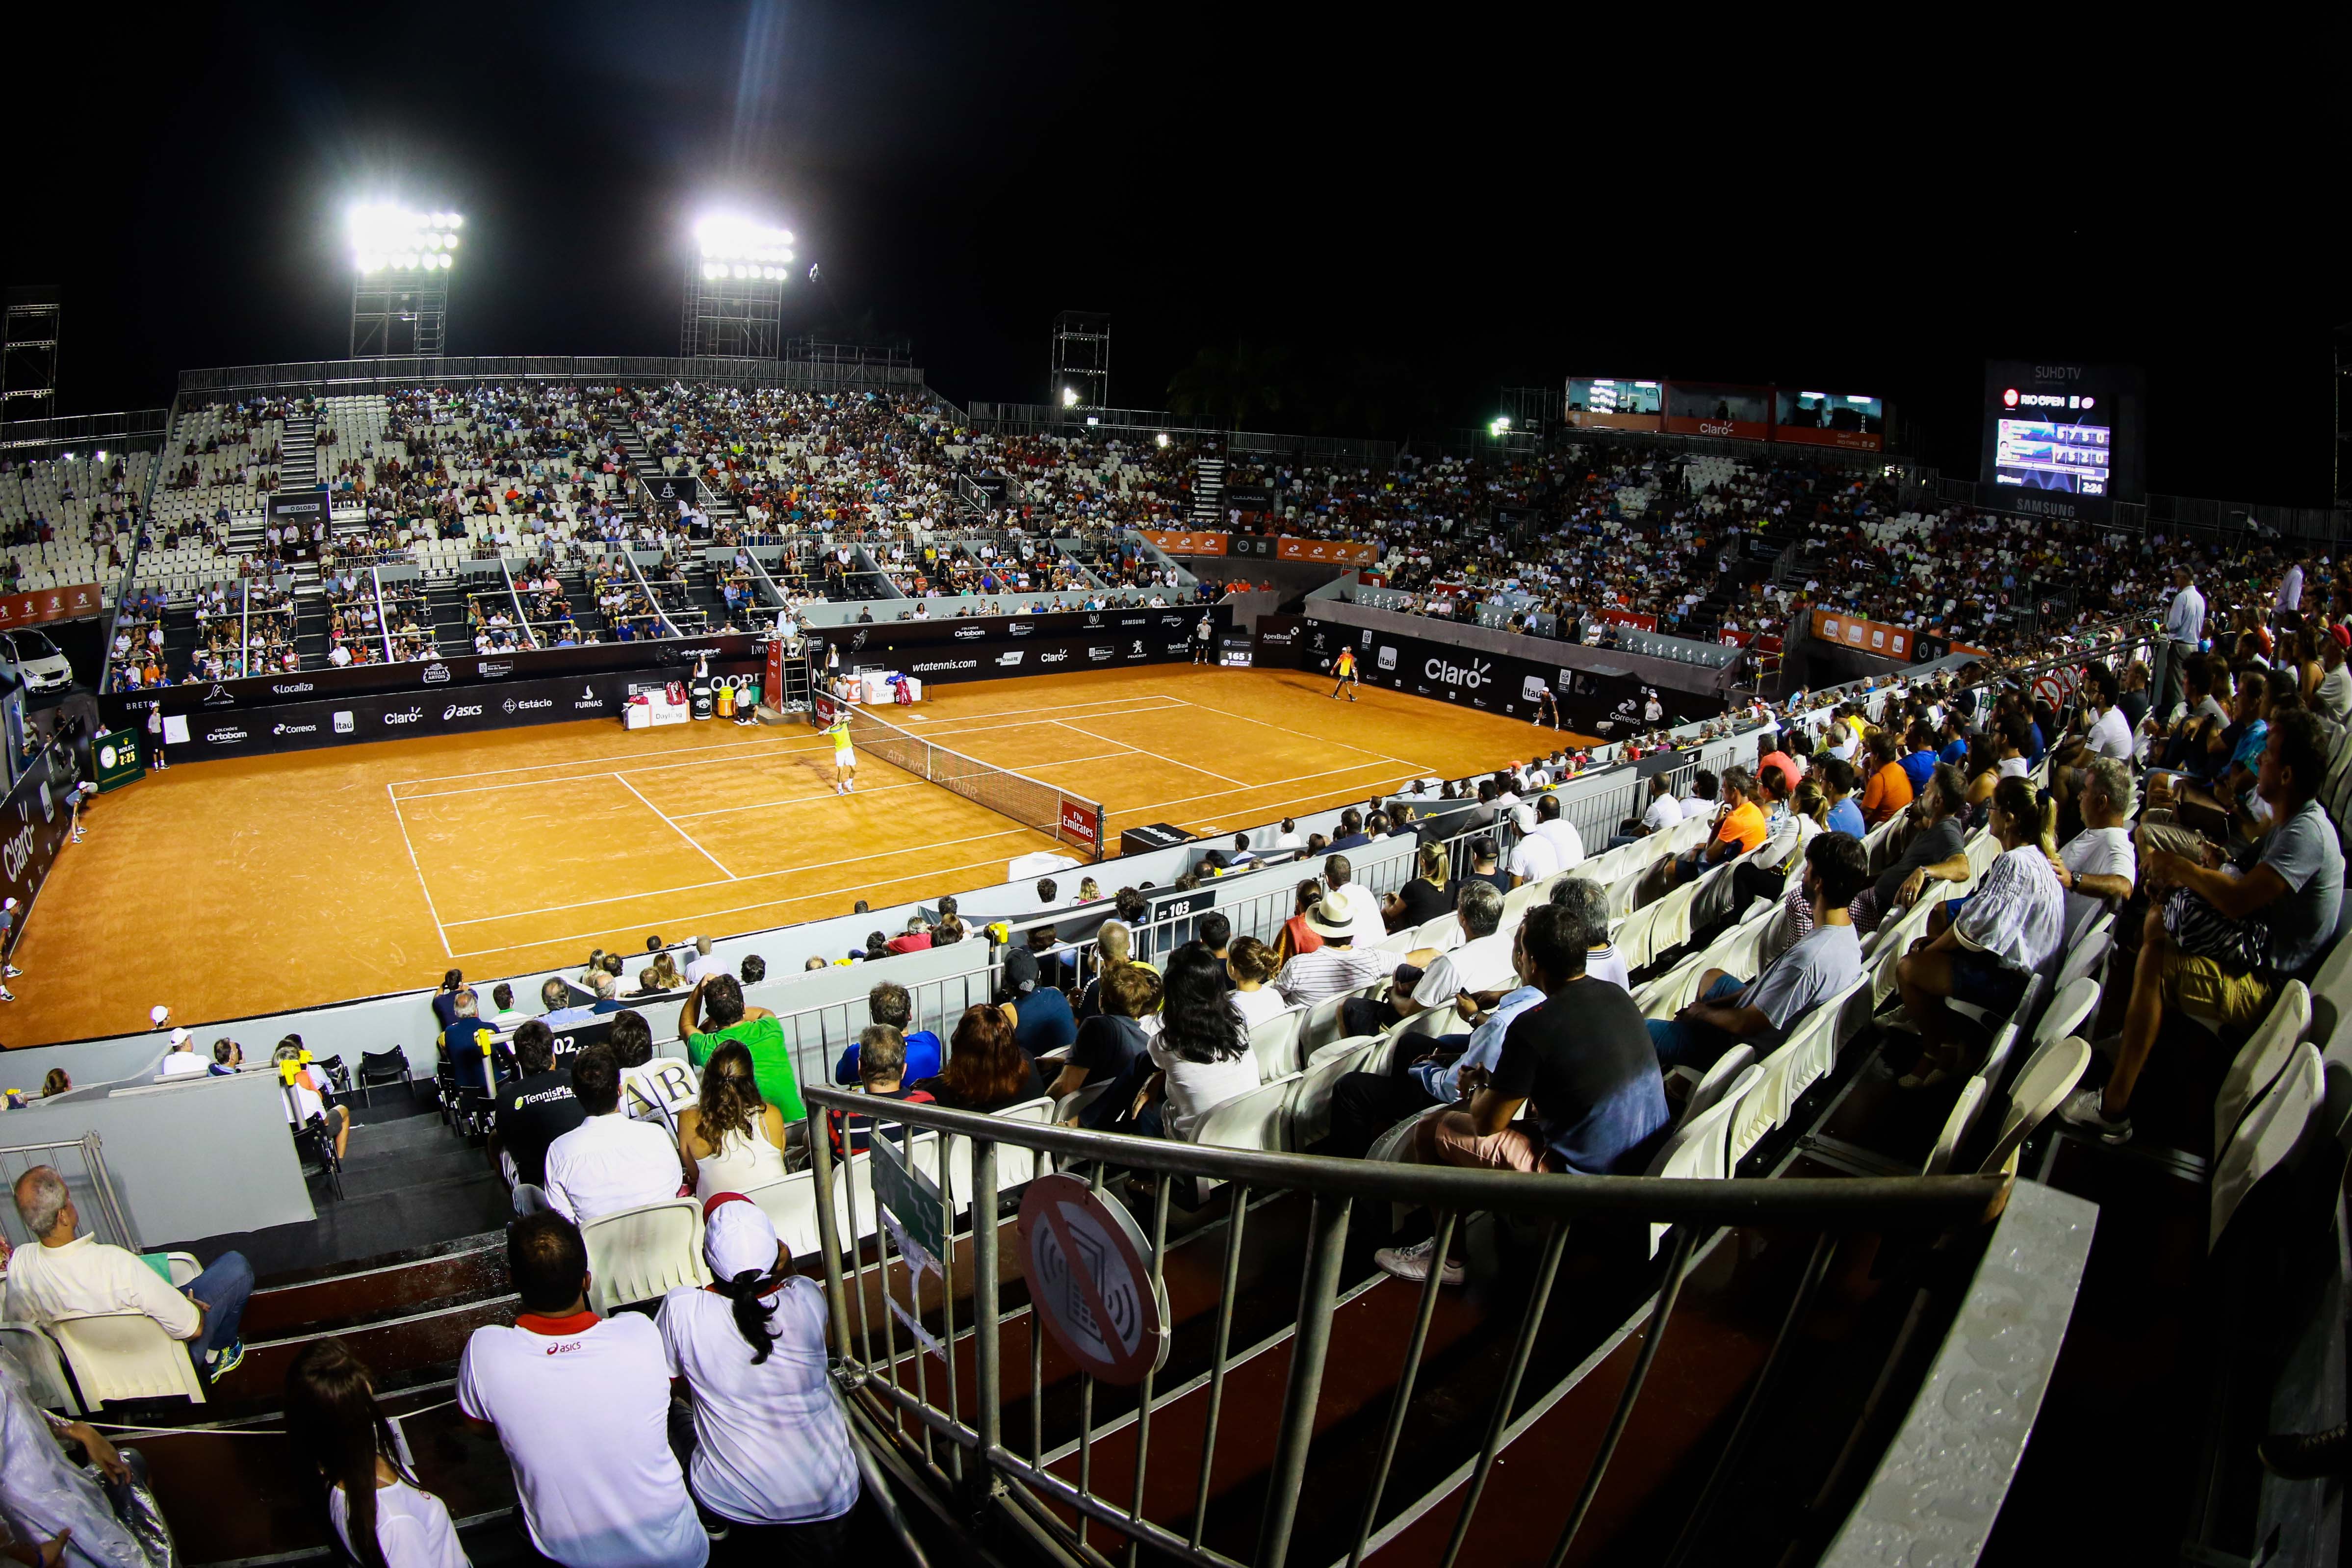 Campeonato de tênis carioca busca maior importância internacional